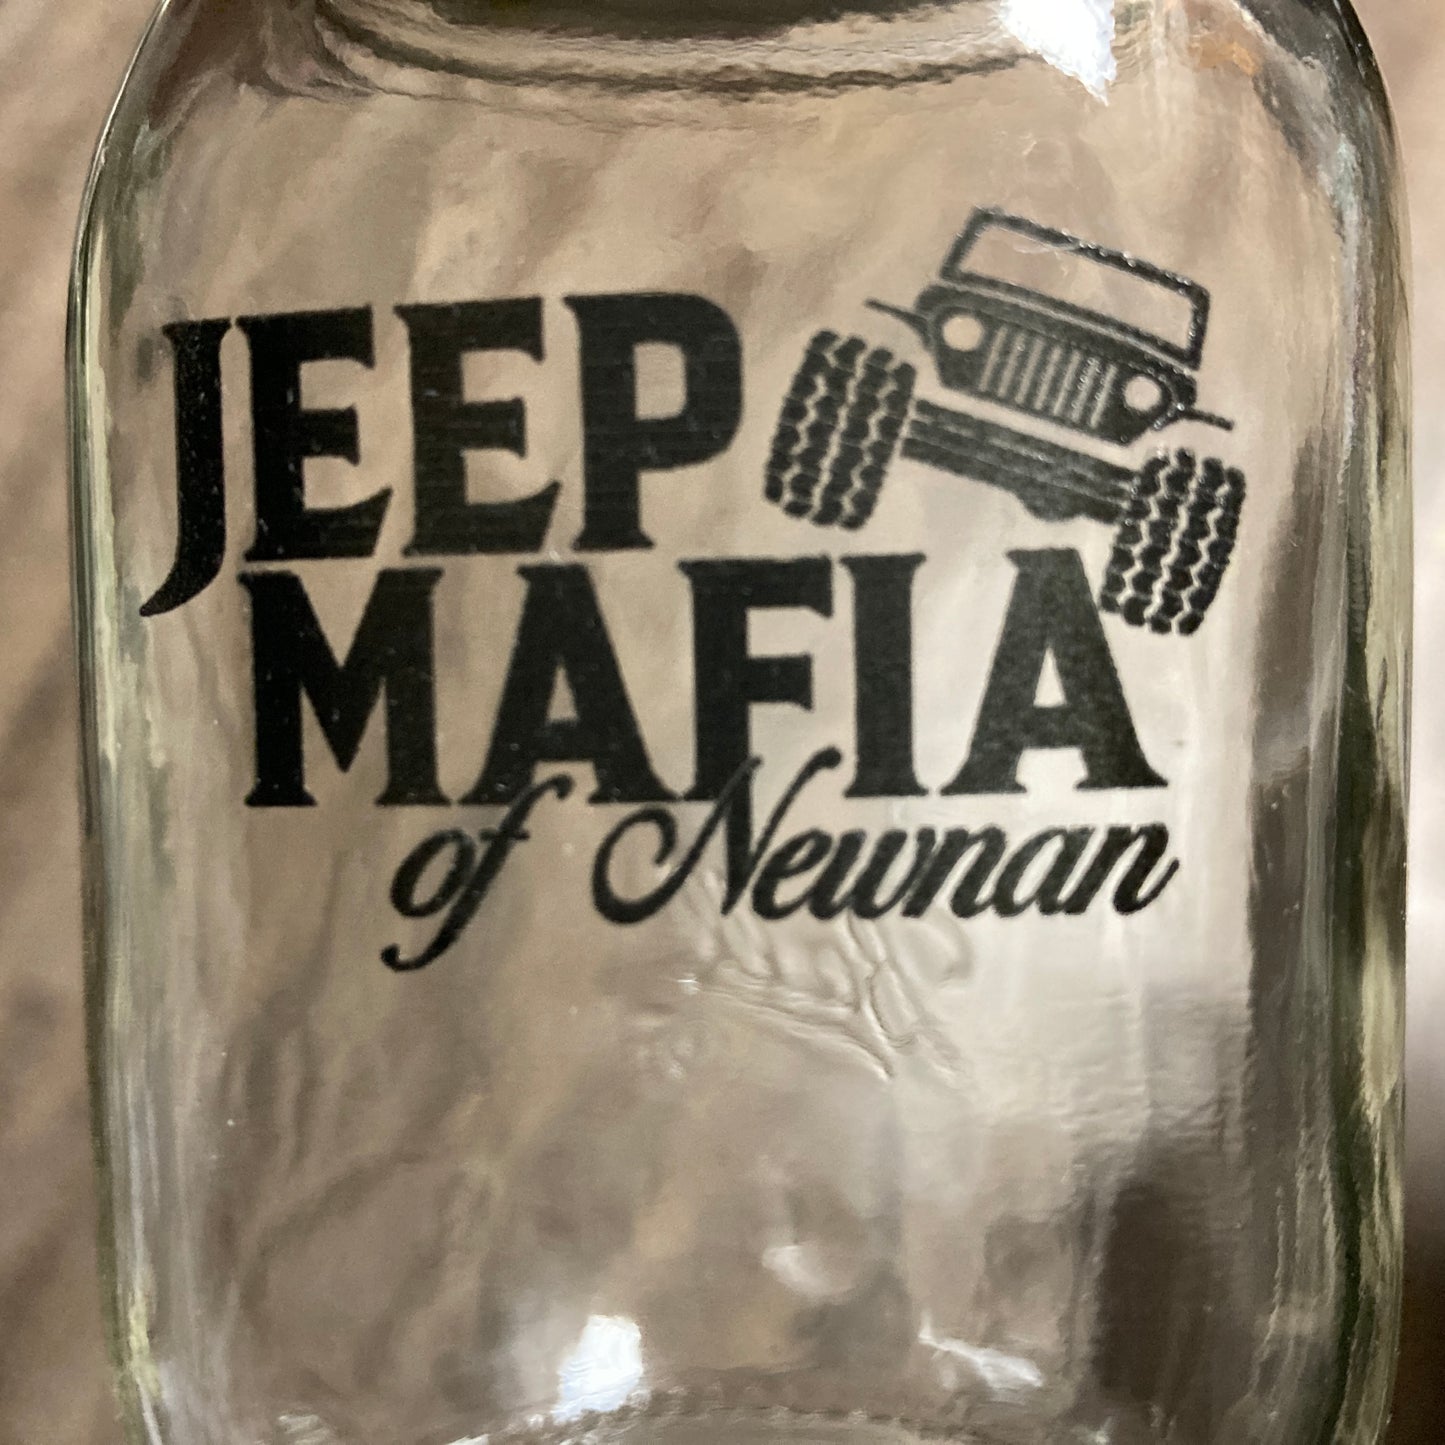 16 oz Ball Jar with Jeep Mafia of Newnan Engraved